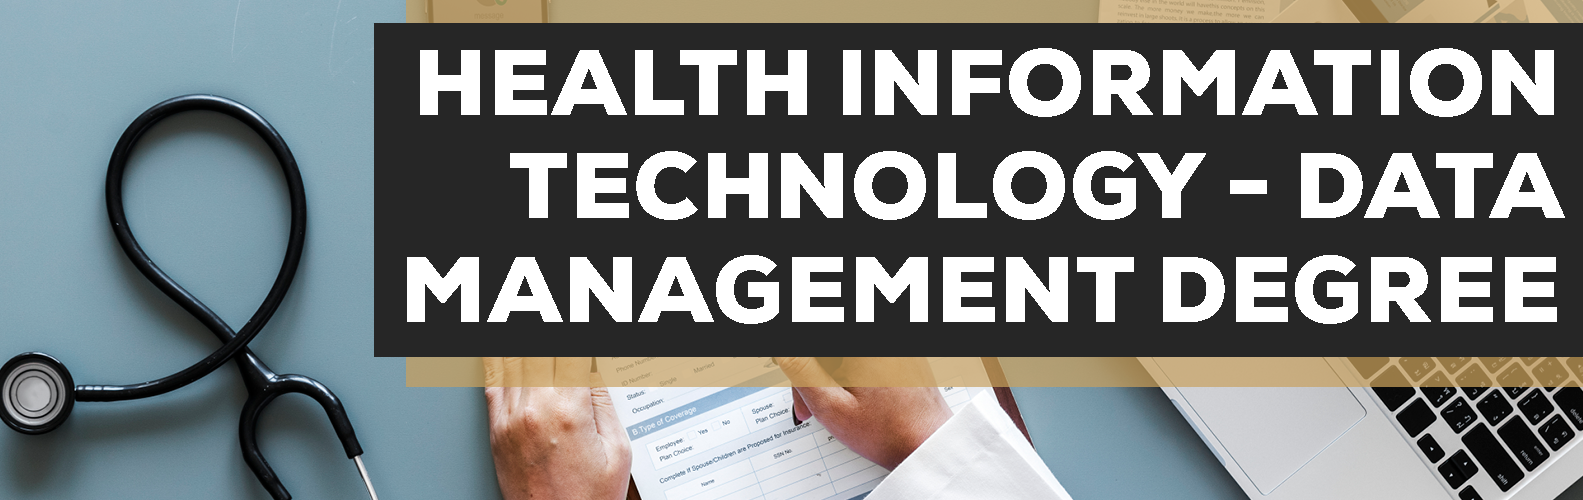 Health Information Technology - Data Management Degree